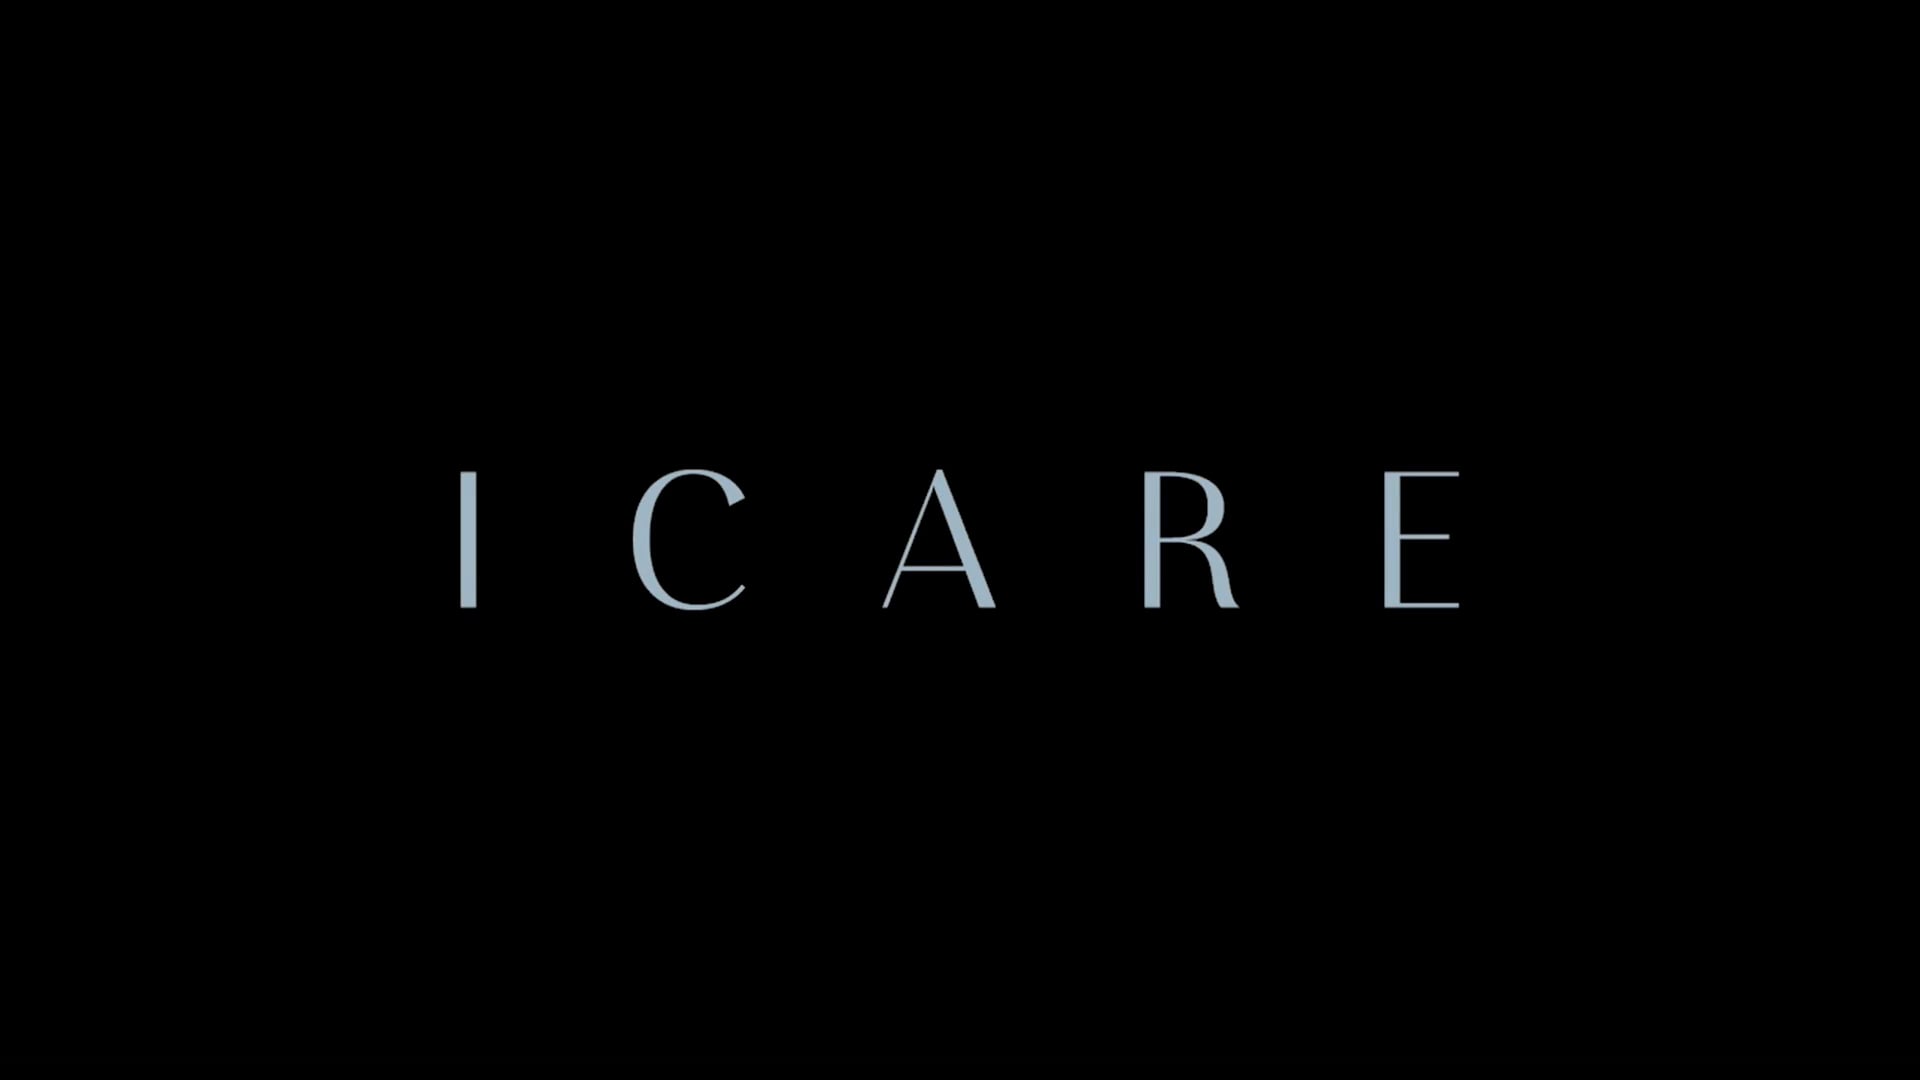 Watch Icare (english subs) Online Vimeo On Demand on Vimeo